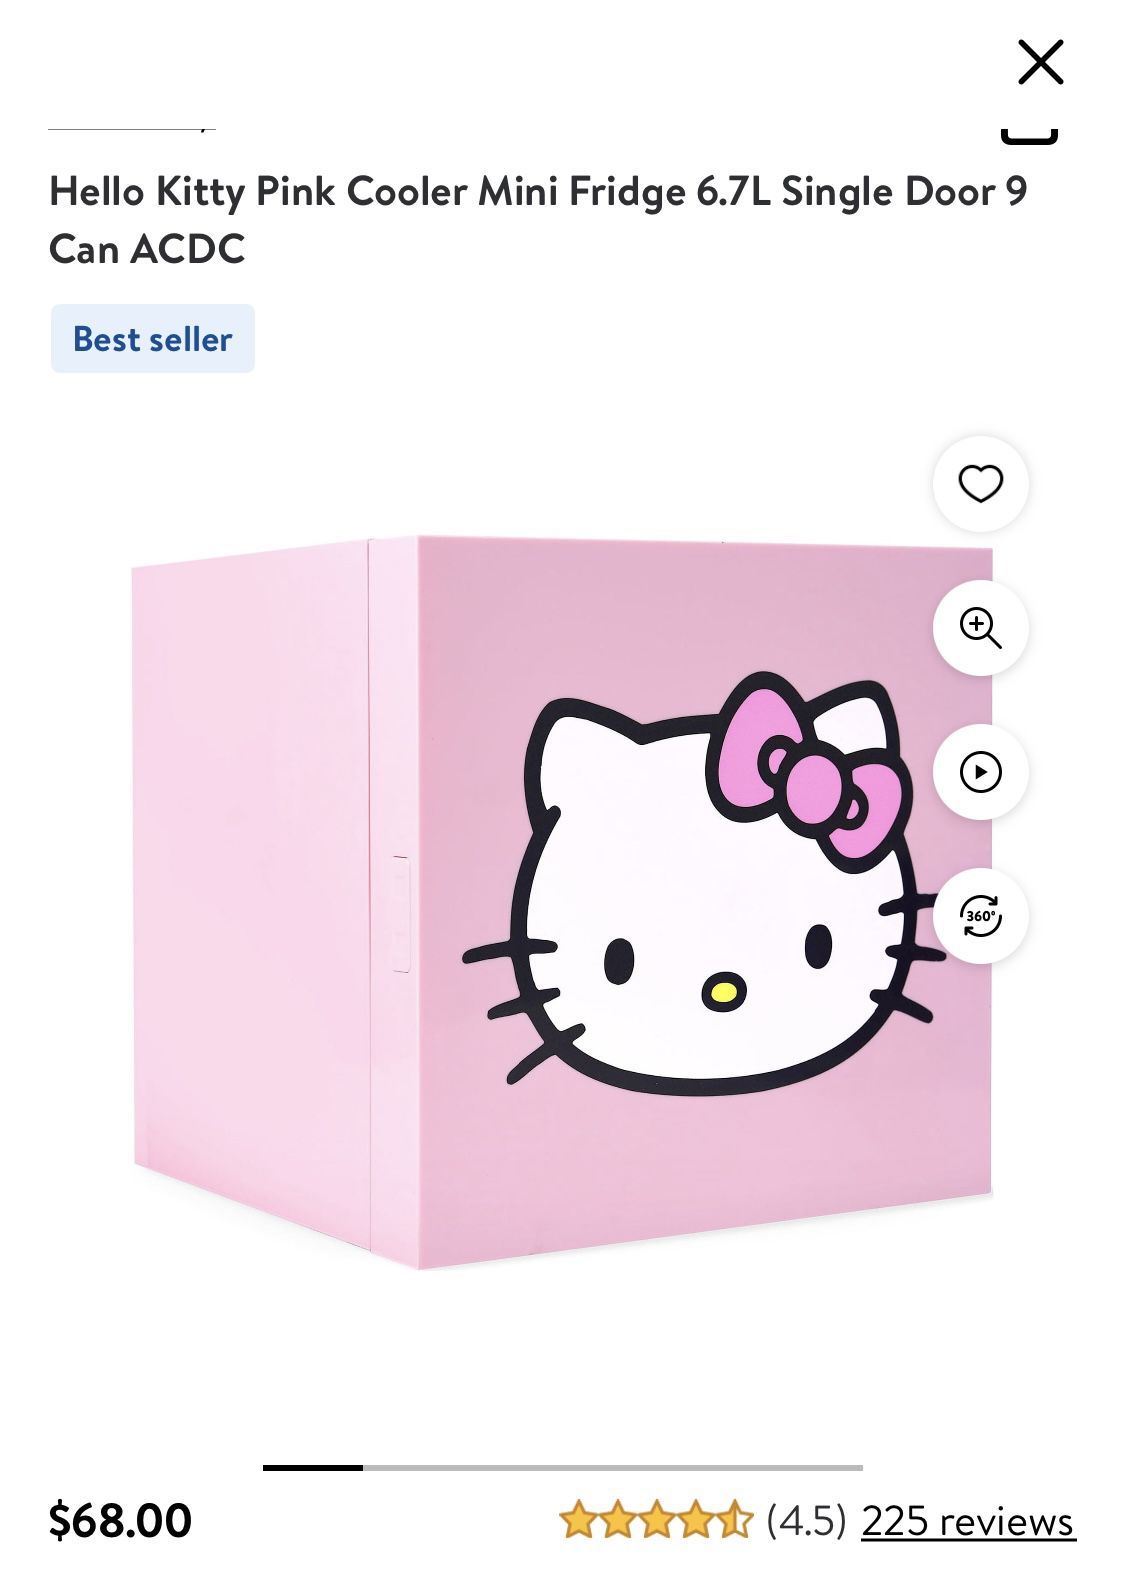 Hello Kitty Pink Cooler Mini Fridge 6.7L Single Door 9 Can ACDC$40